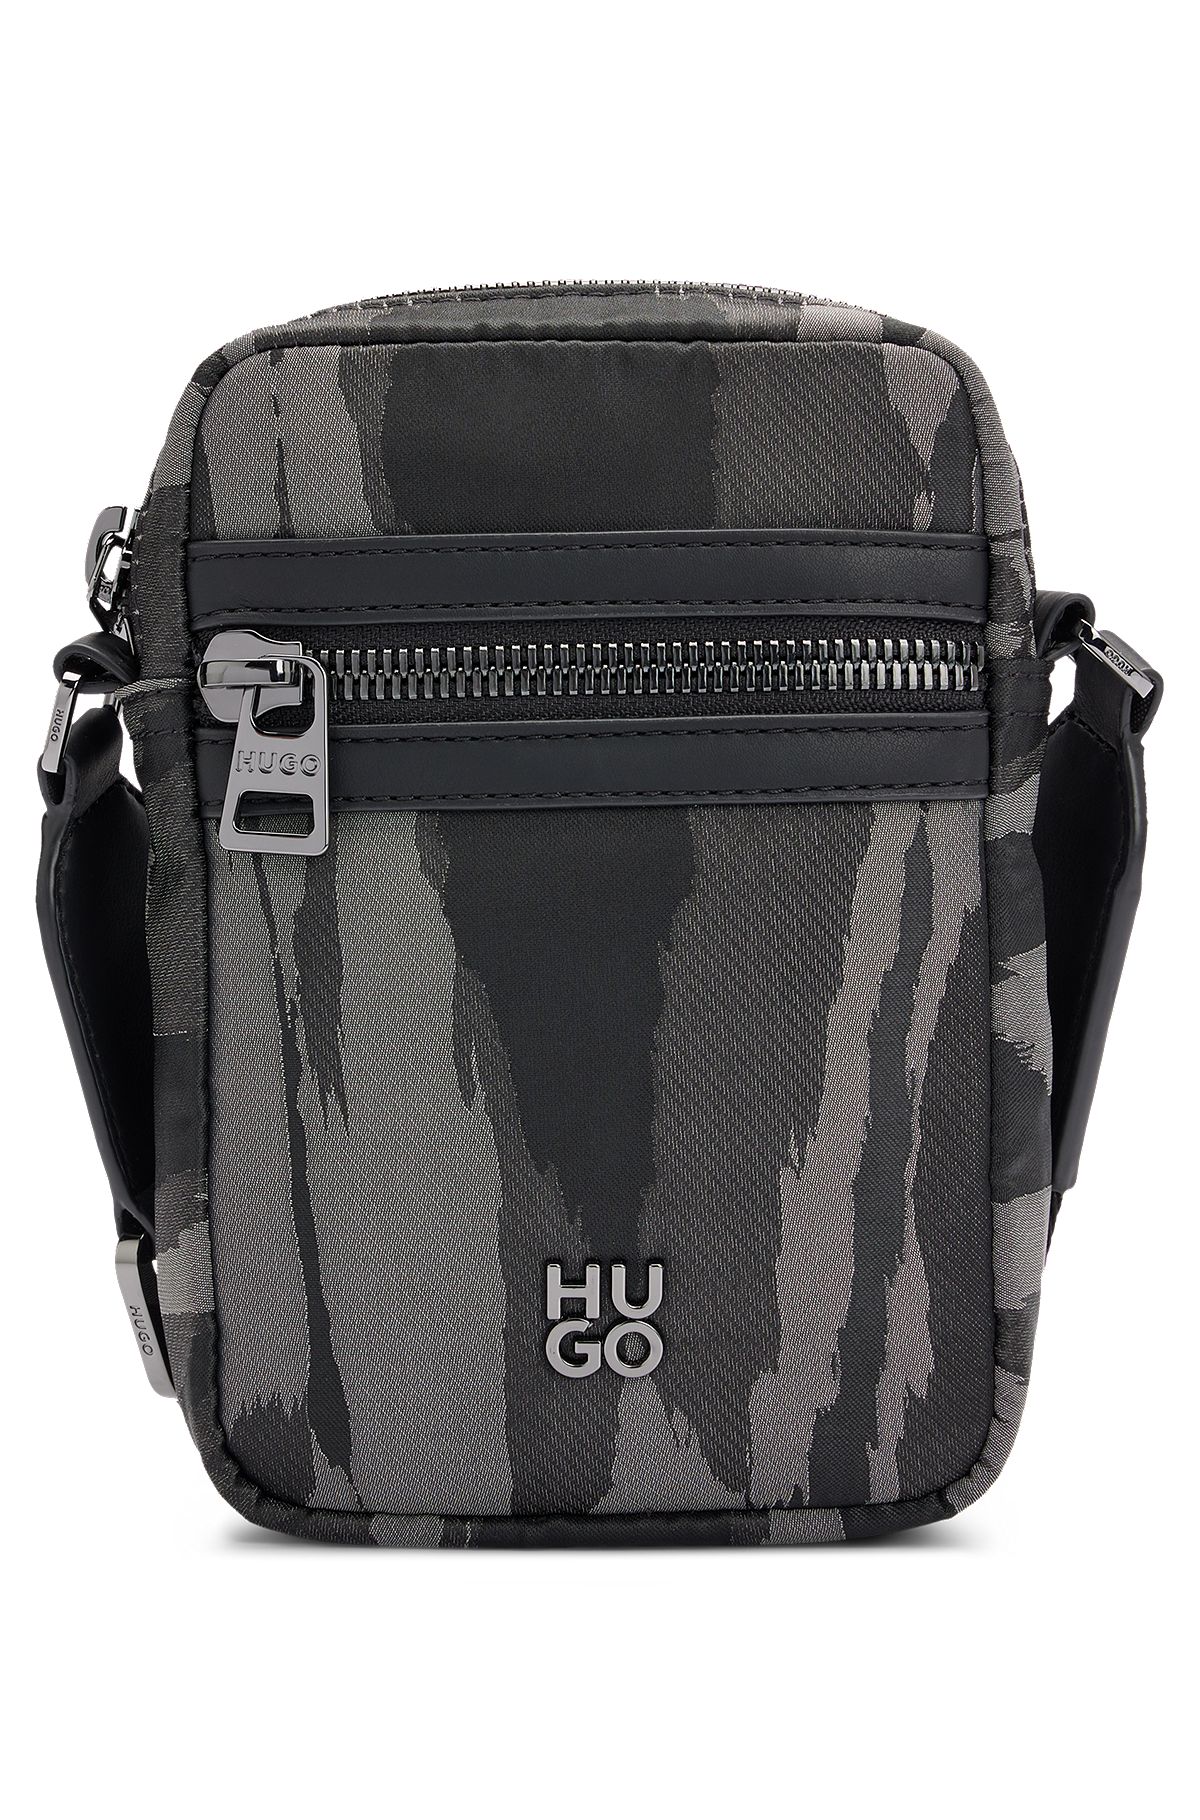 Stacked-logo reporter bag with seasonal pattern, Black